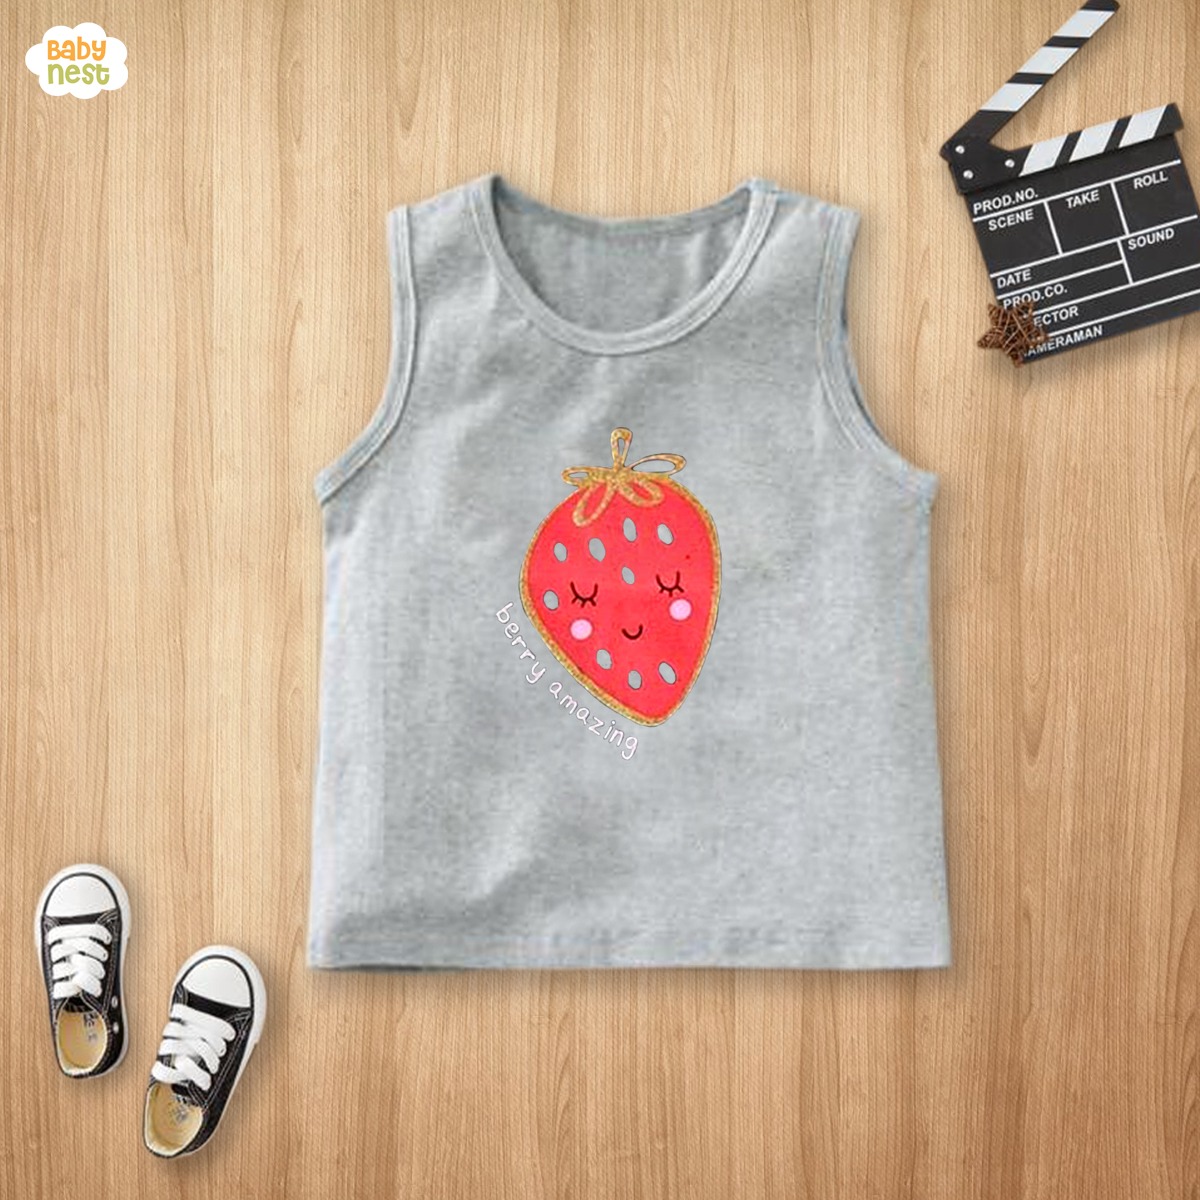 BNBBS-110 – Berry Amazing Print Sandos for Kids – Grey